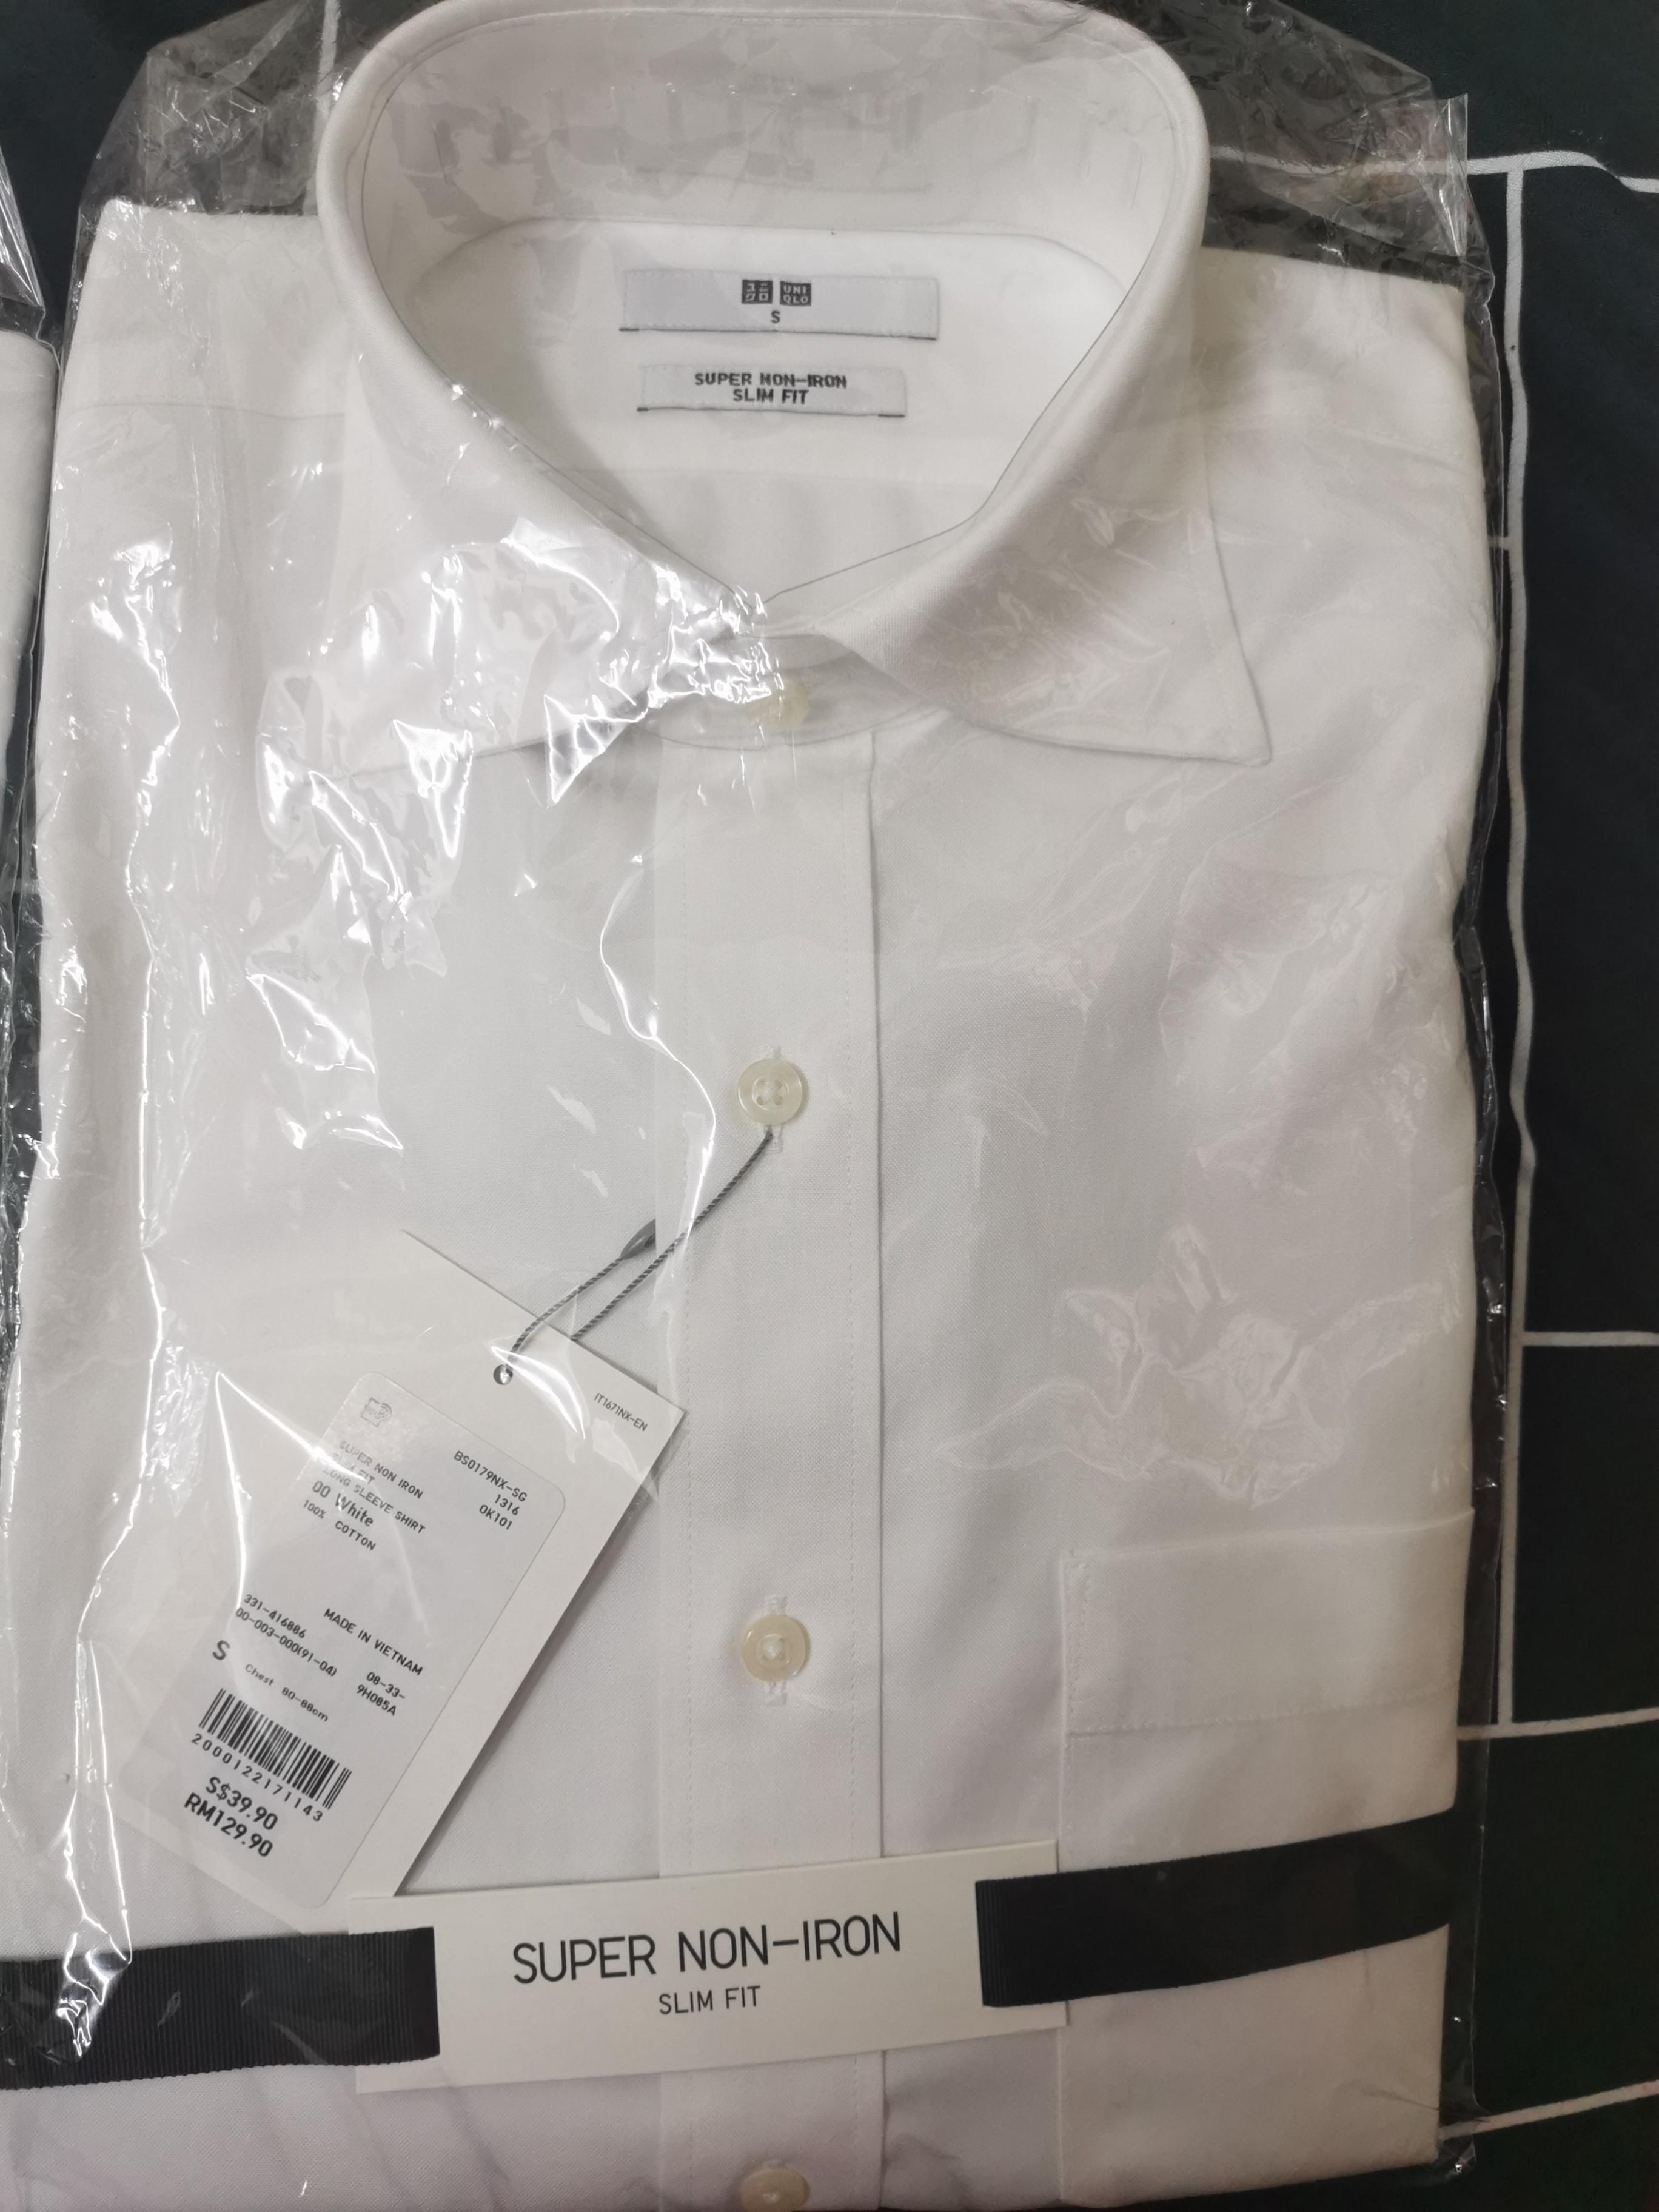 UNIQLO Super NonIron SlimFit LongSleeve Shirt Review  Japan Masterpiece